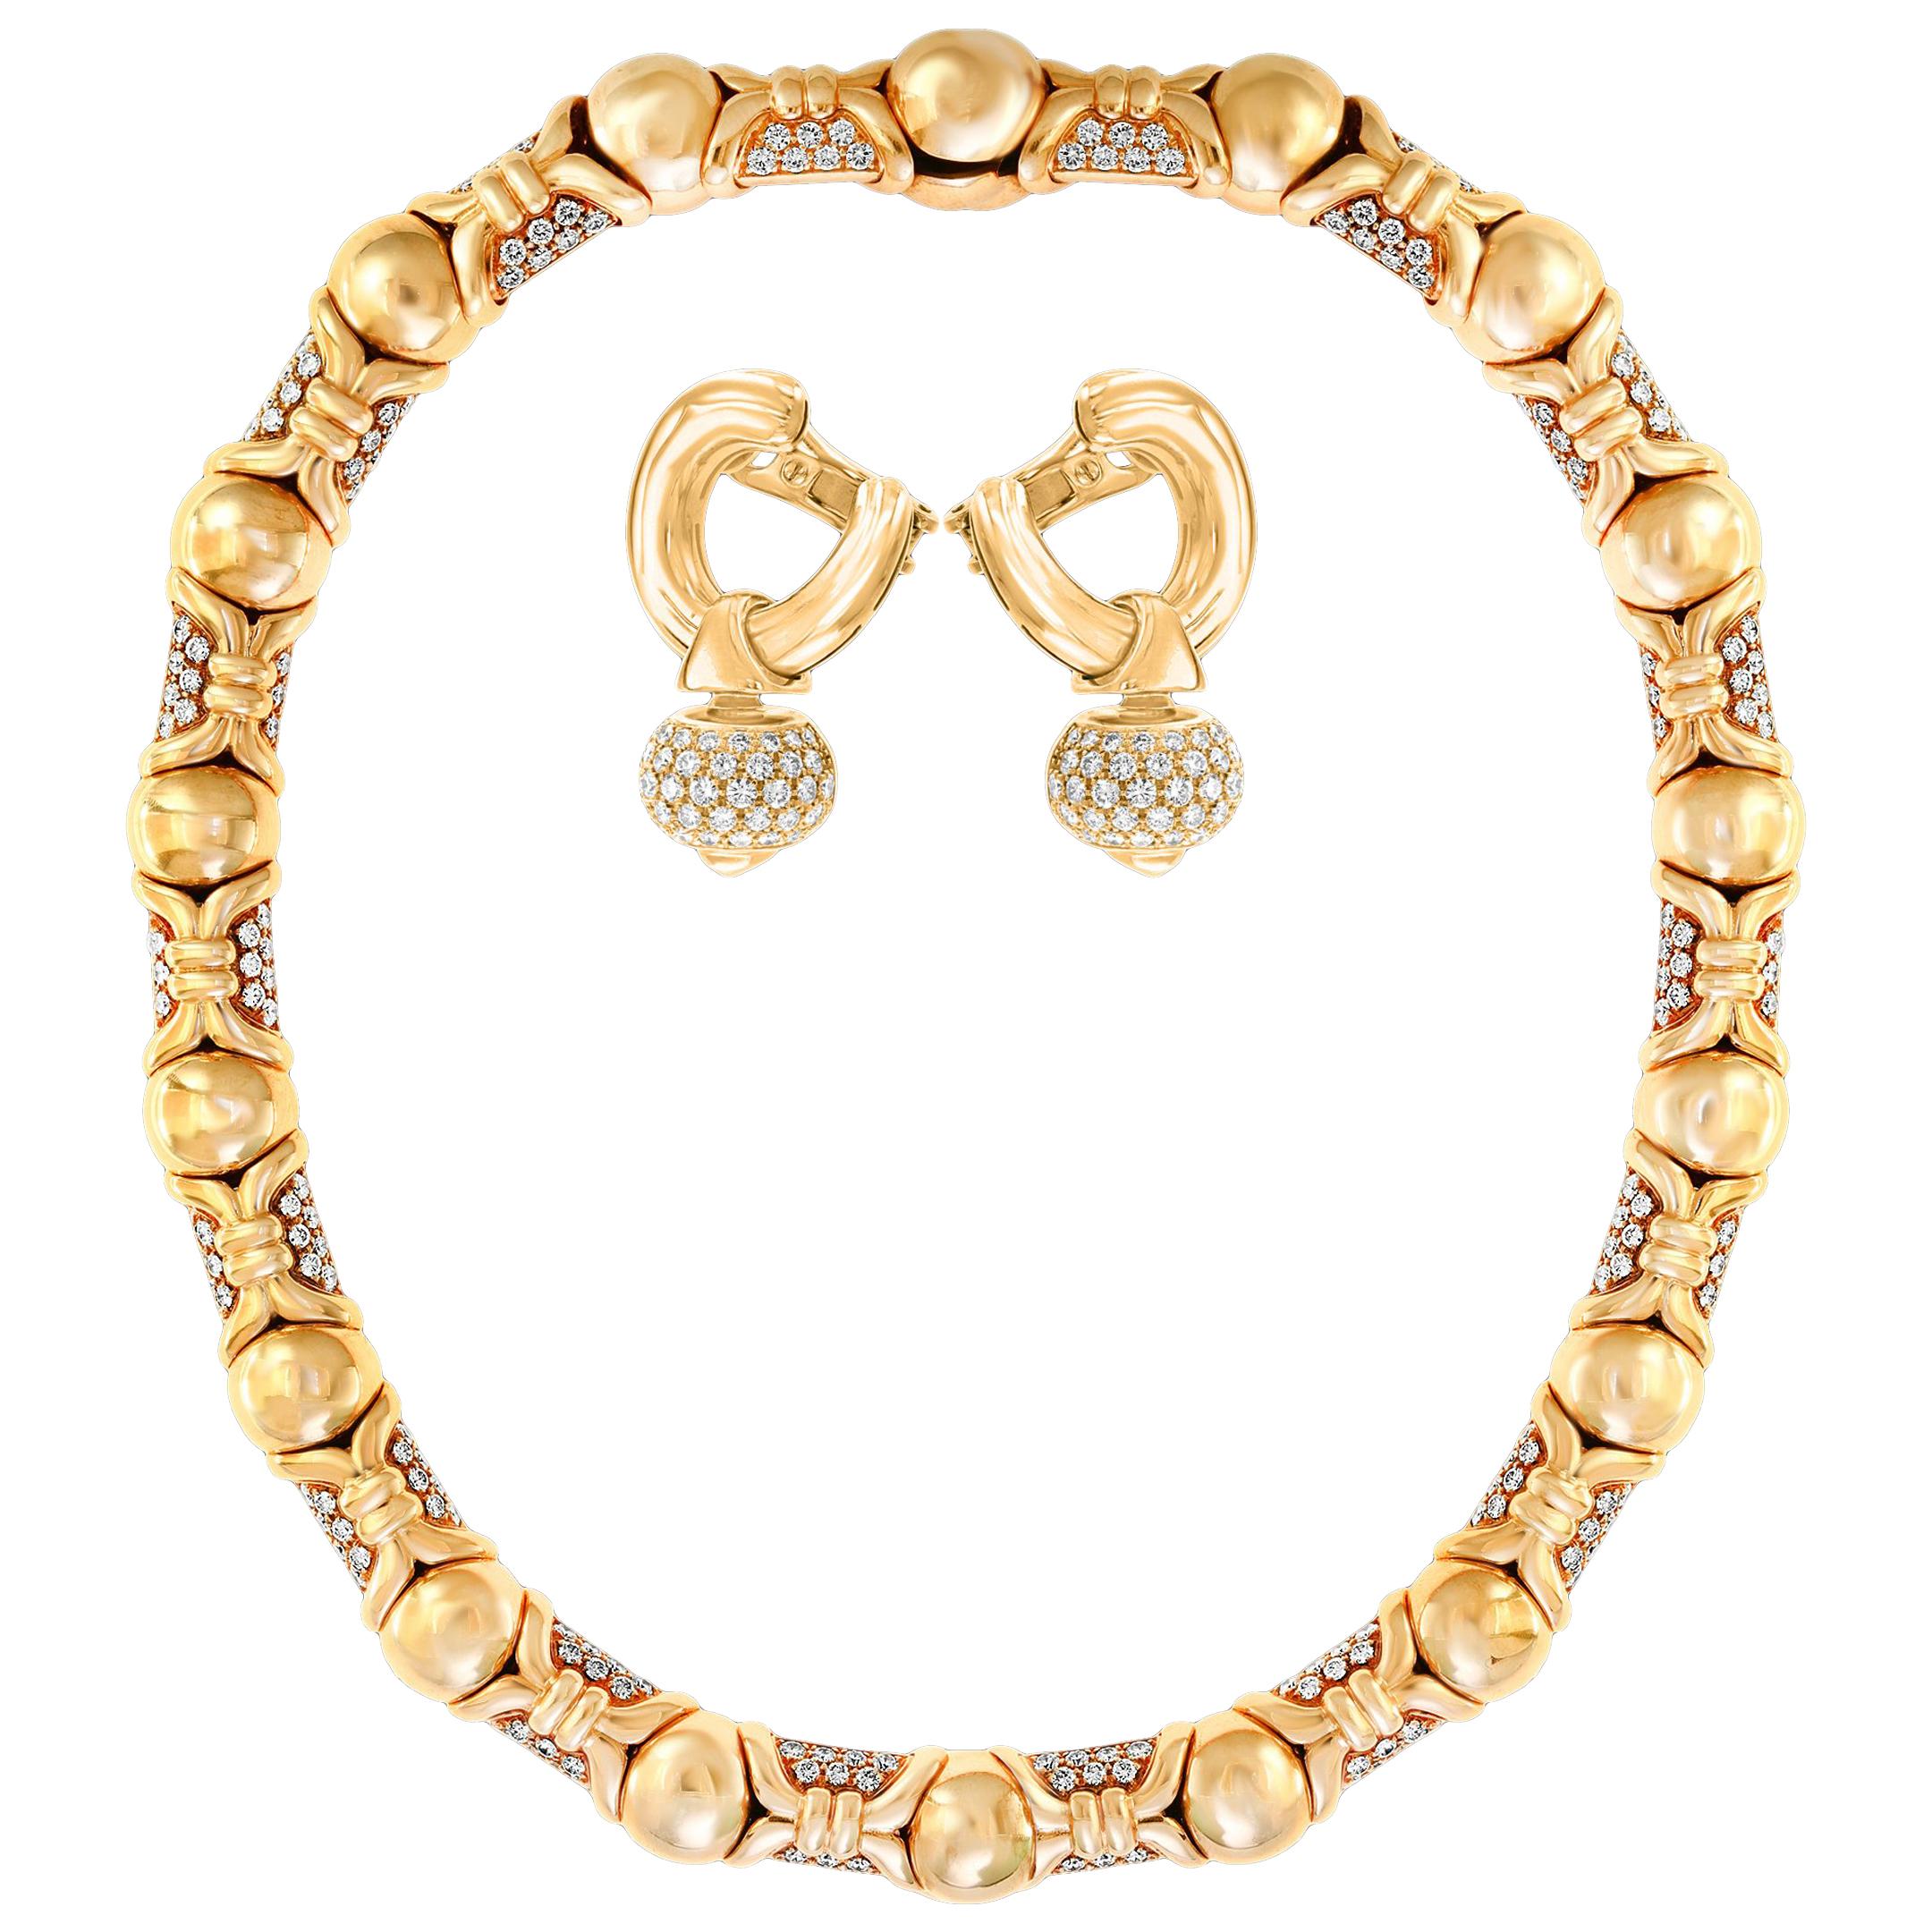 Bulgari Suite Necklace and Earrings in 18 Karat Gold and 12 Carat Diamonds